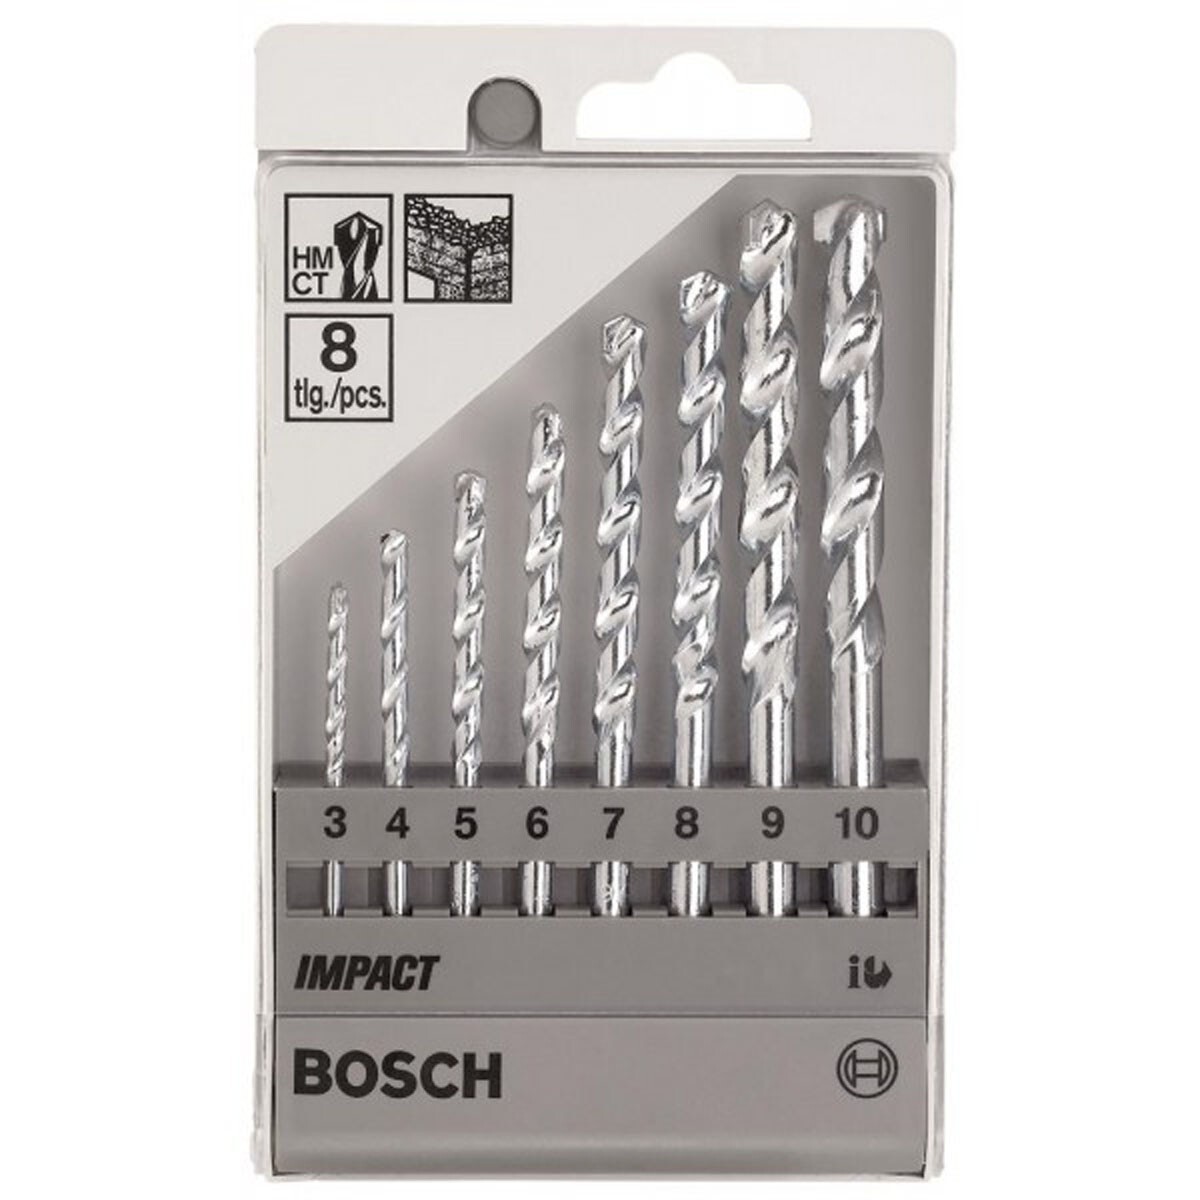 Set 8 Broca Bosch Cyl-1 3,4,5,6,7,8,9,10 Mm 